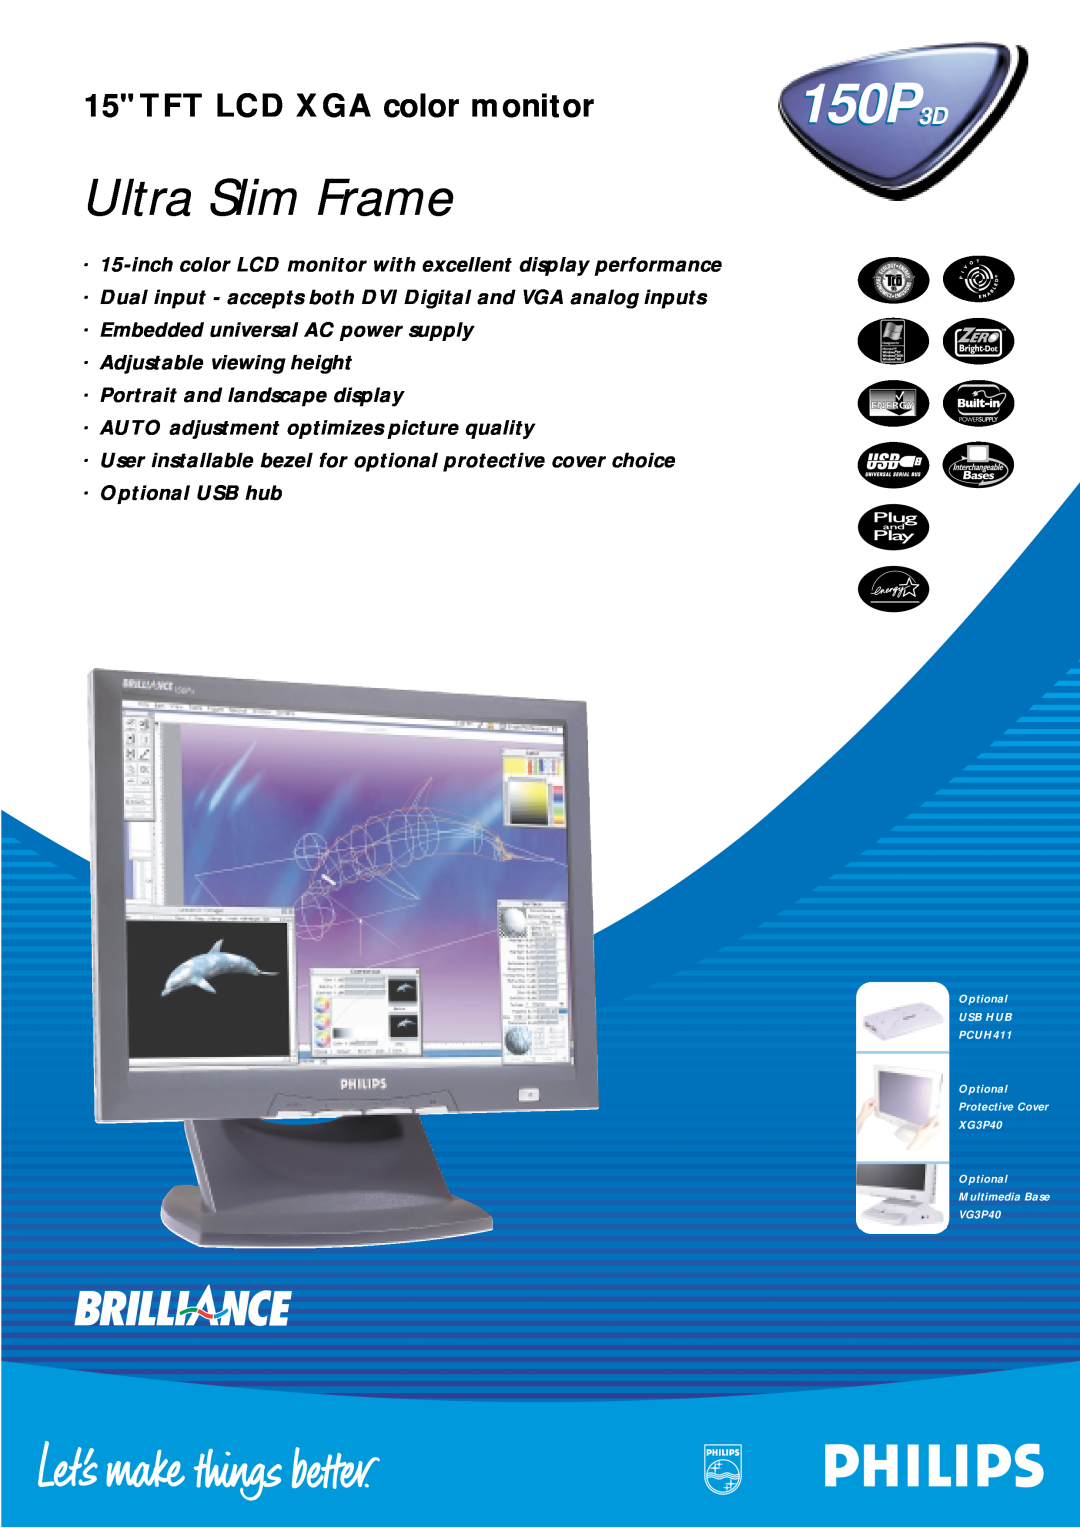 Philips 150P3D manual Ultra Slim Frame, TFT LCD XGA color monitor 